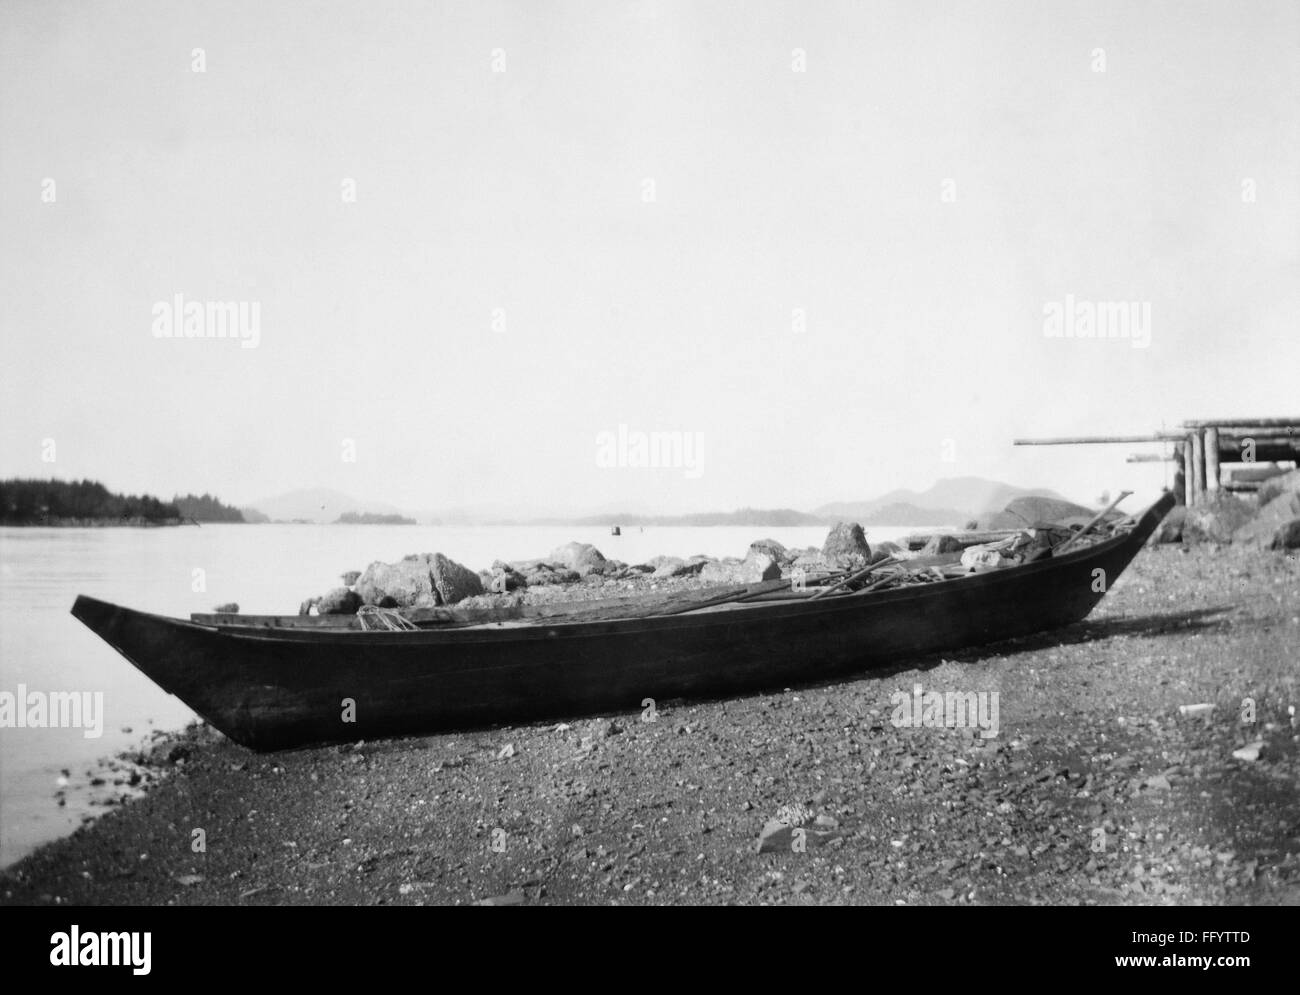 ALASKA: DUGOUT CANOE, 1905. /nA Tlingit dugout canoe on the shore at Sitka, Alaska. Photographed in 1905. Stock Photo